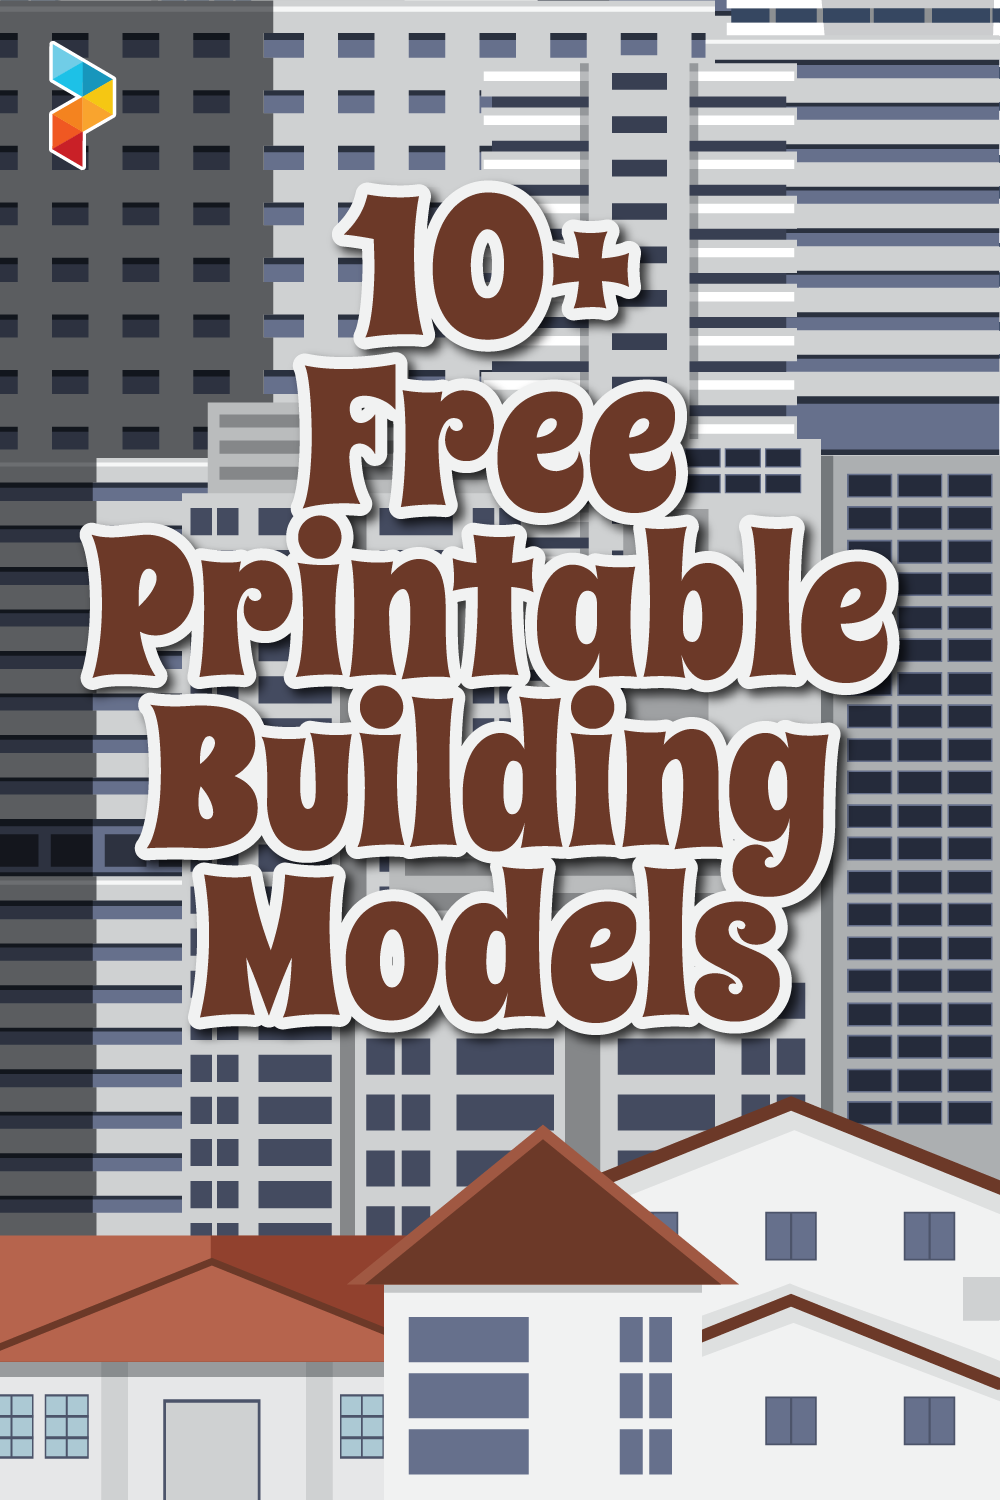 Building Models